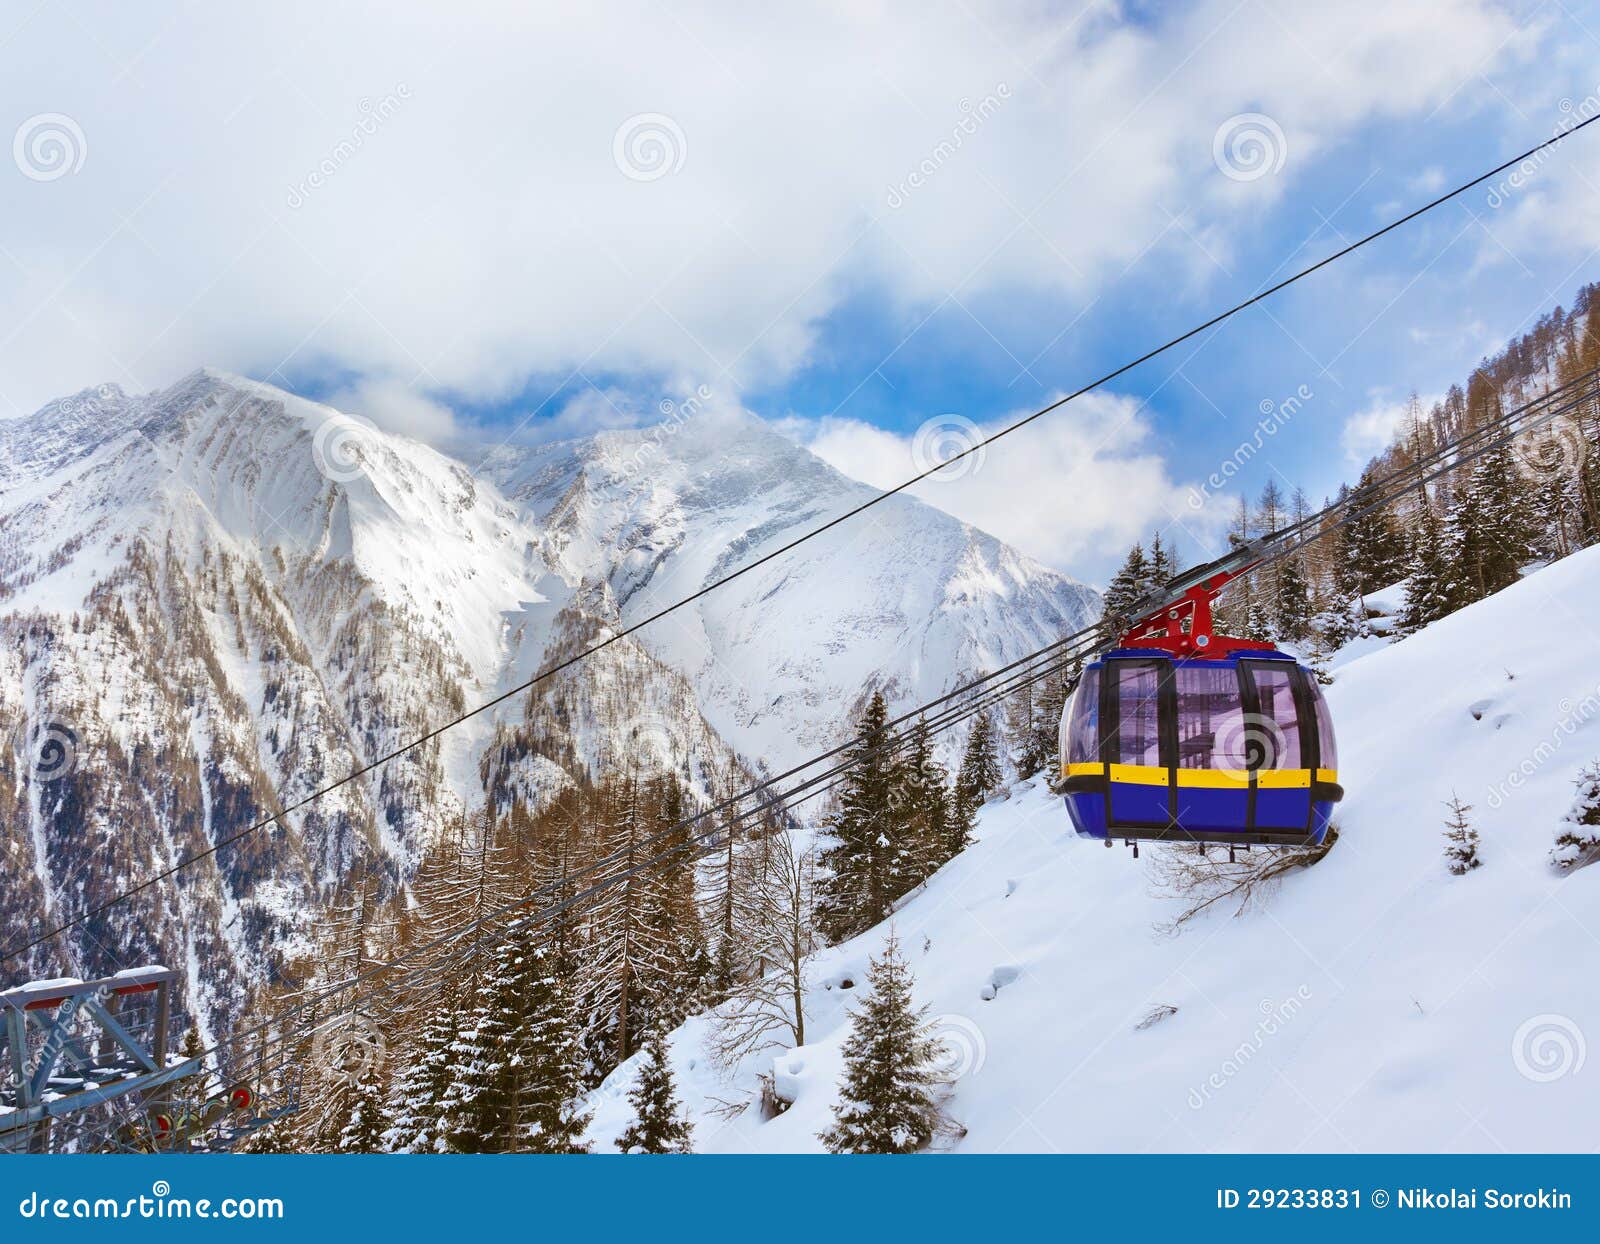 mountains ski resort kaprun austria